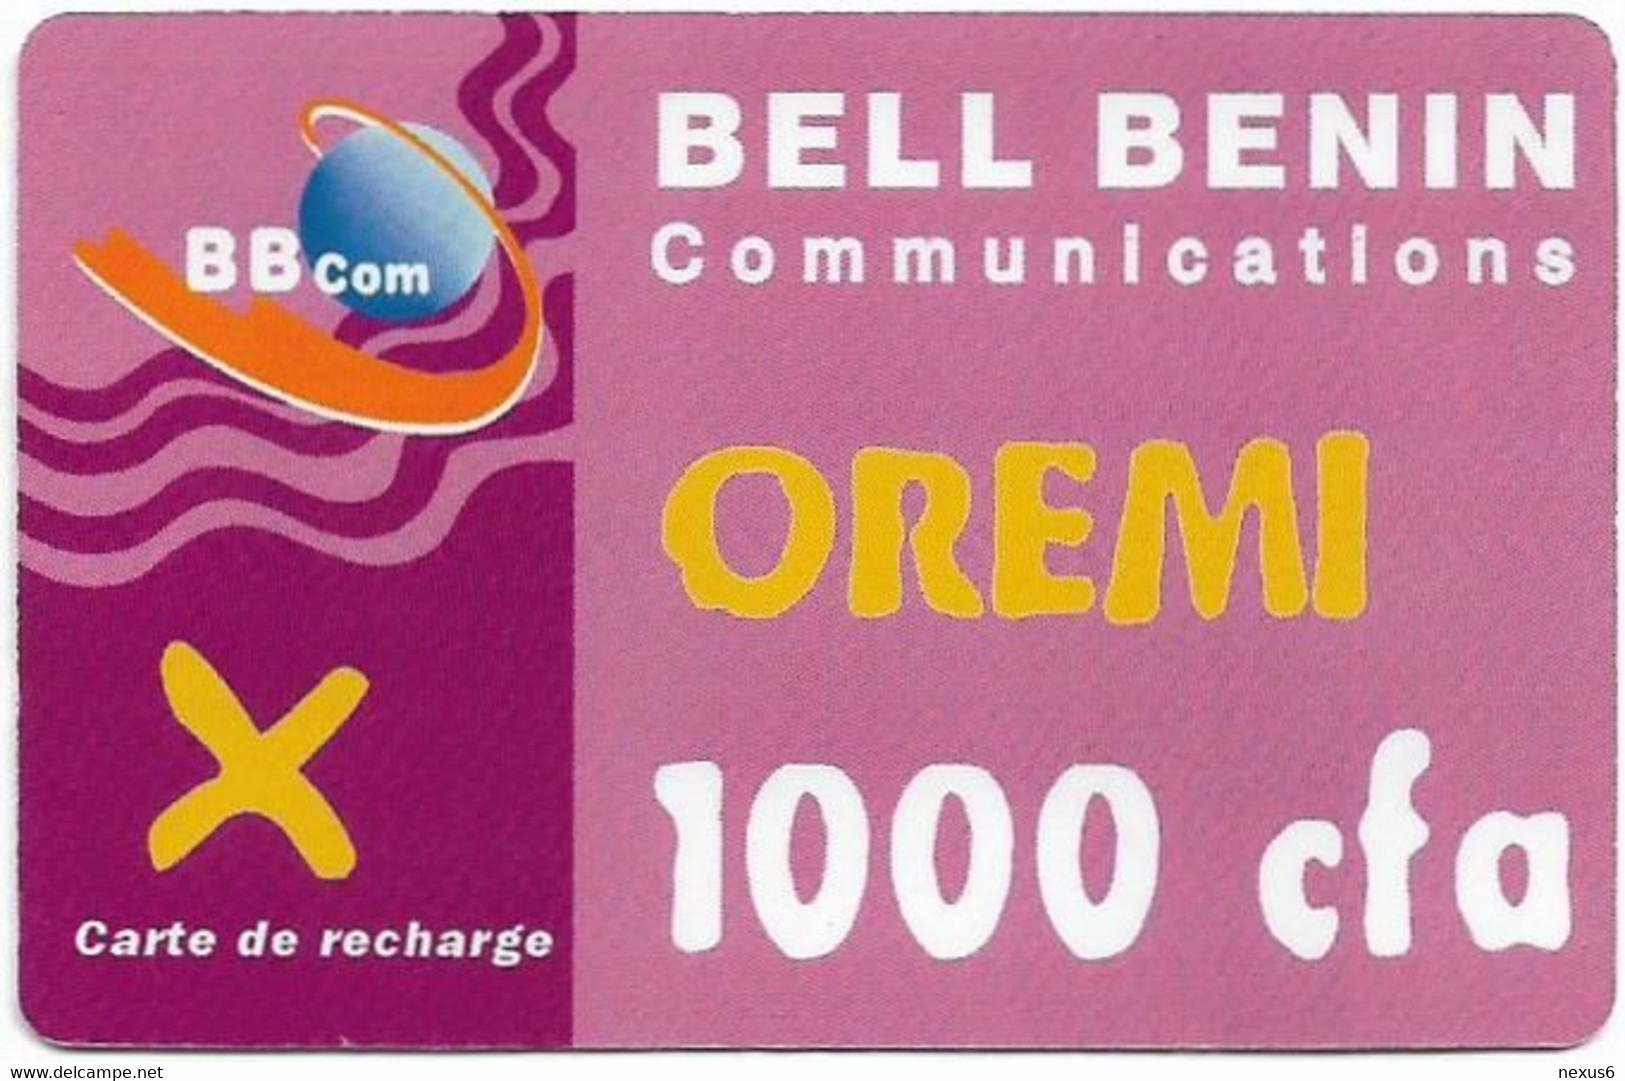 Benin - Bell Benin - Oremi Pink - GSM Refill 1.000CFA, Used - Bénin